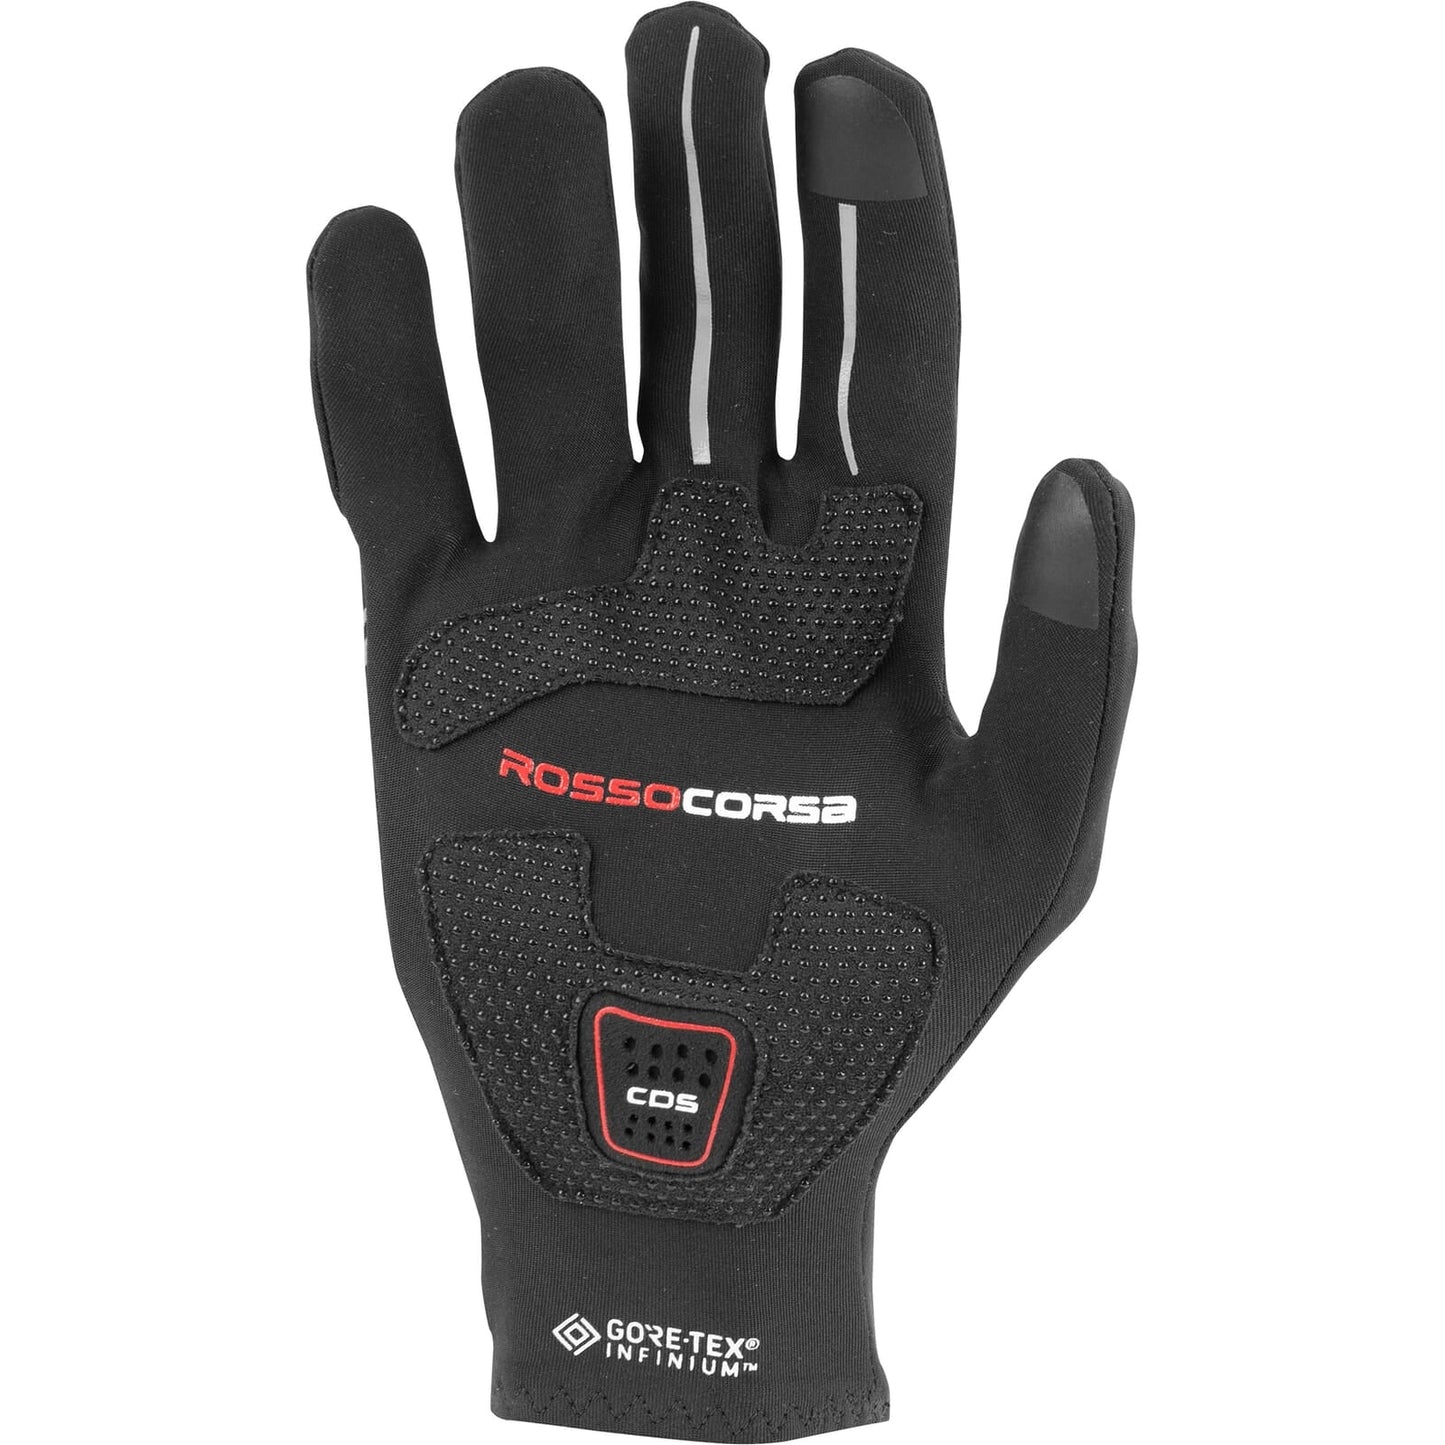 Castelli Perfetto RoS Light Gloves